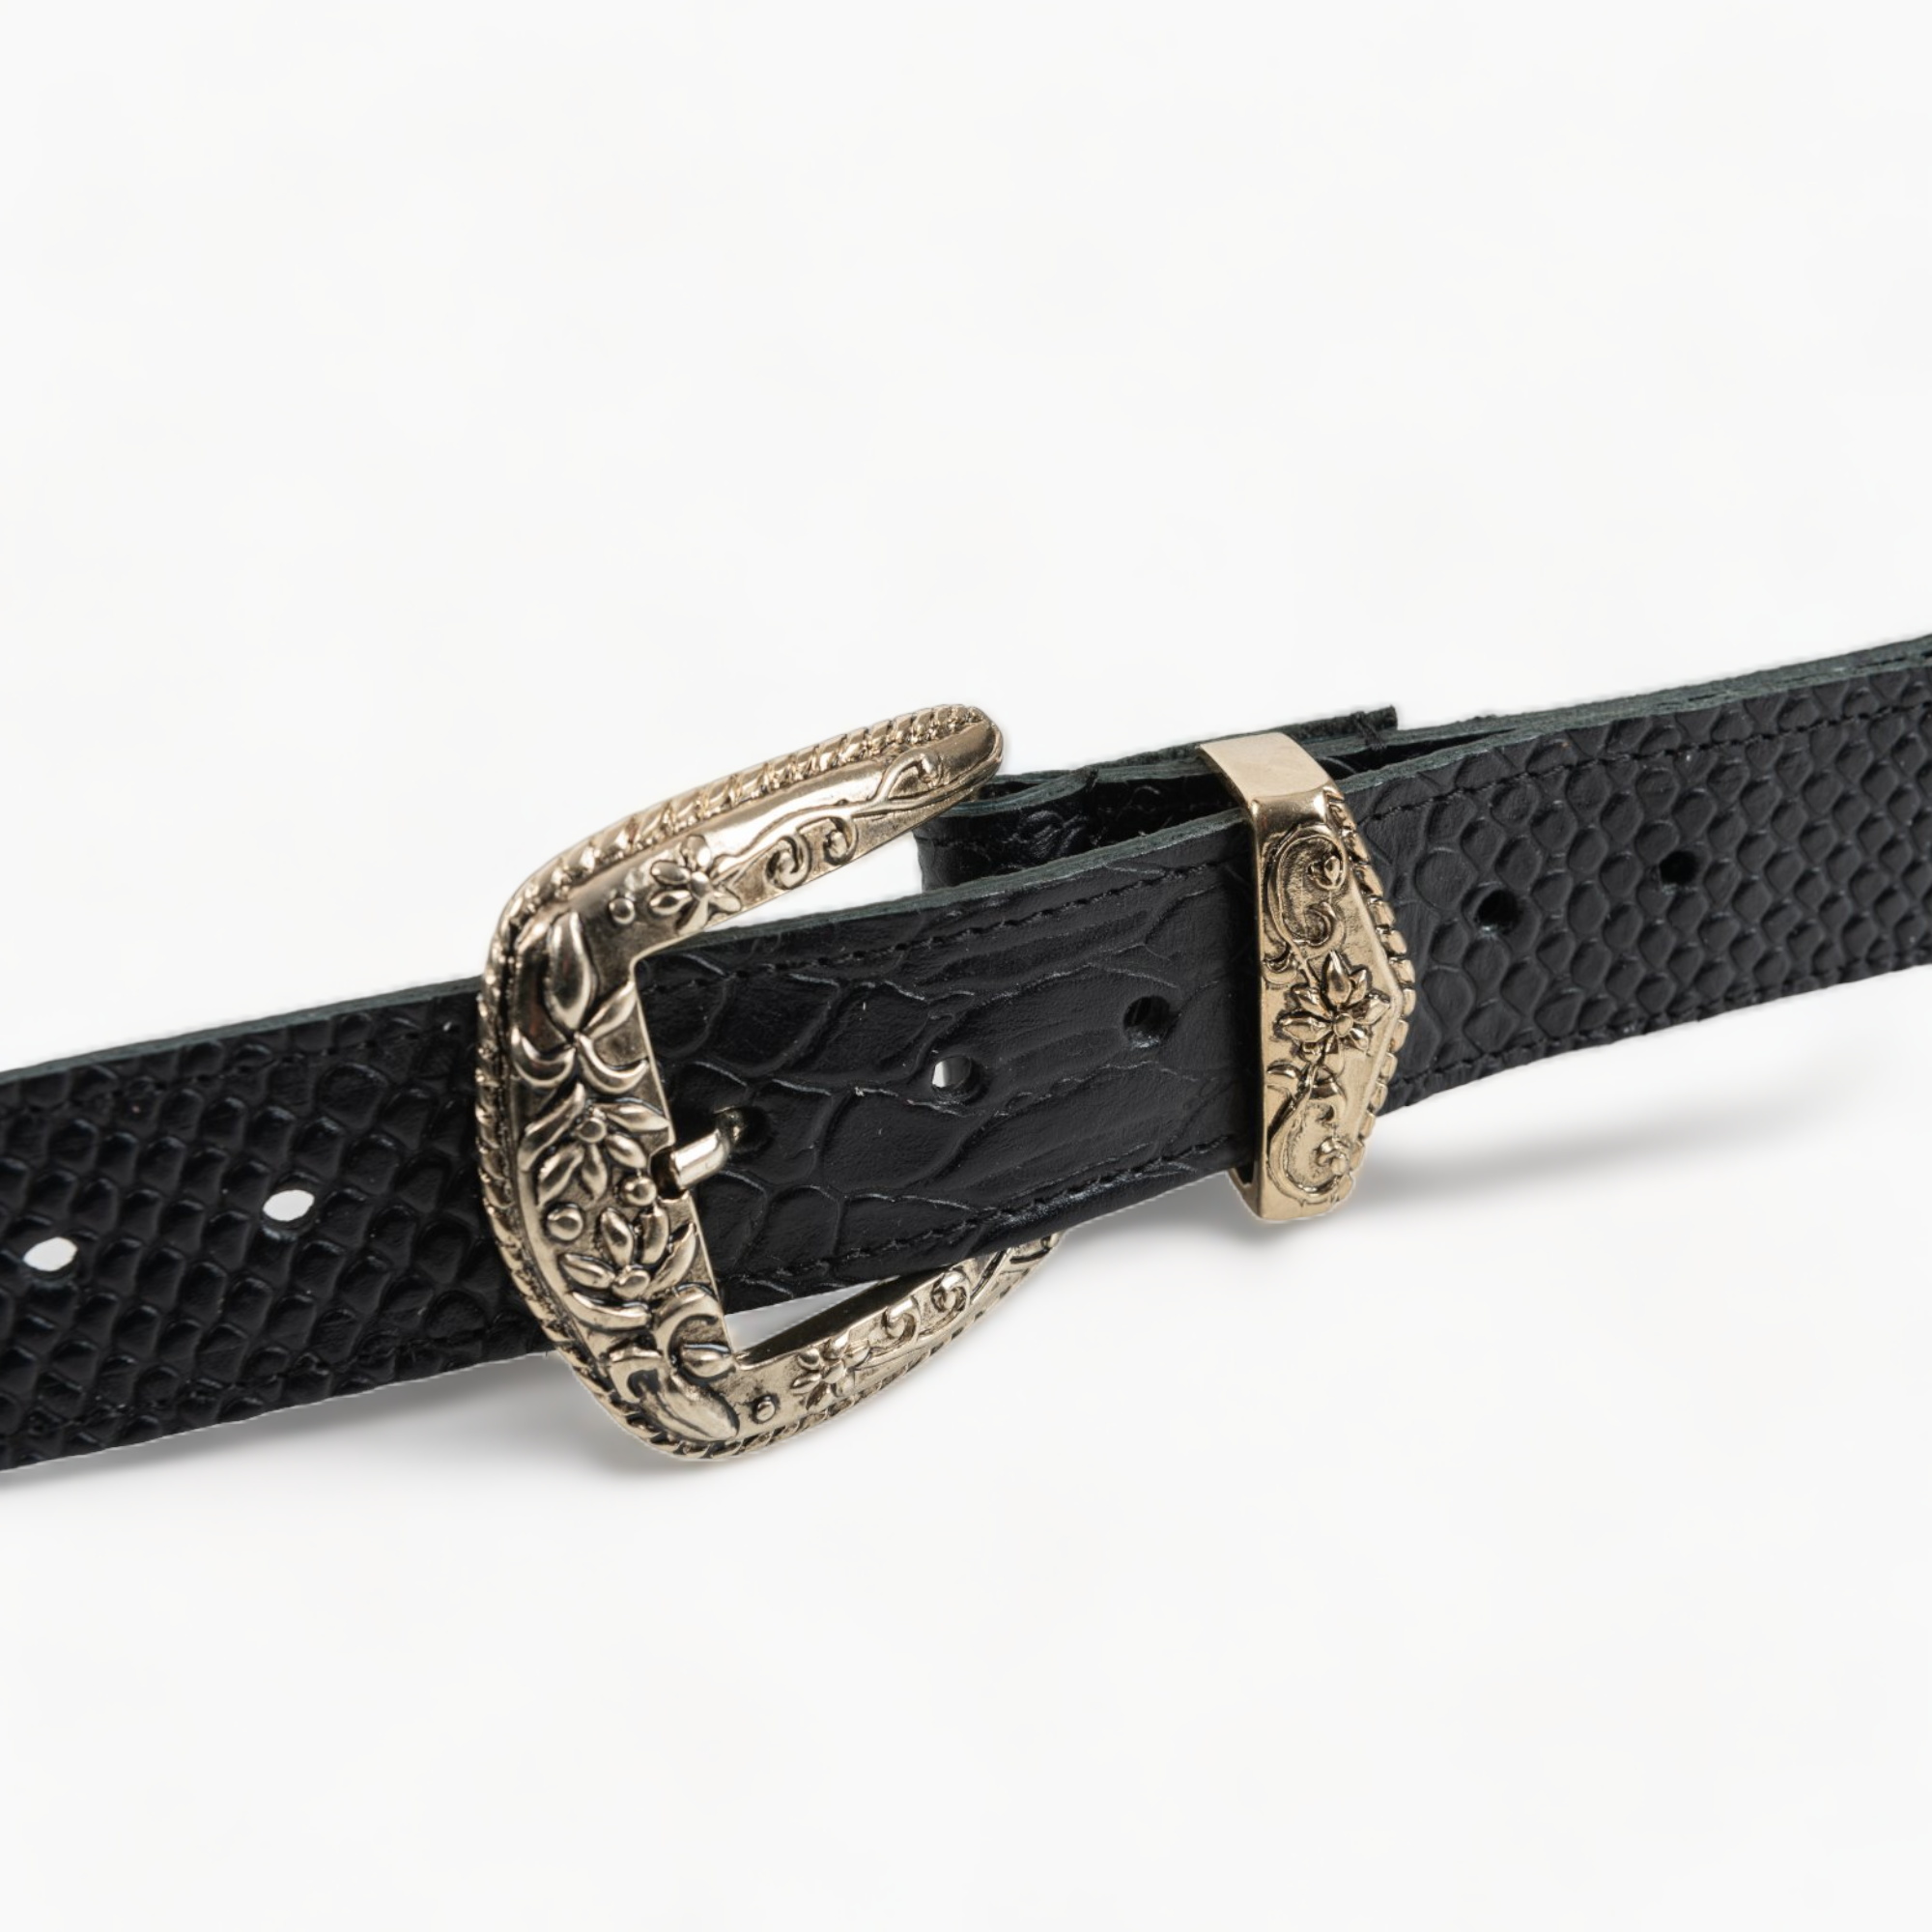 black leather belt